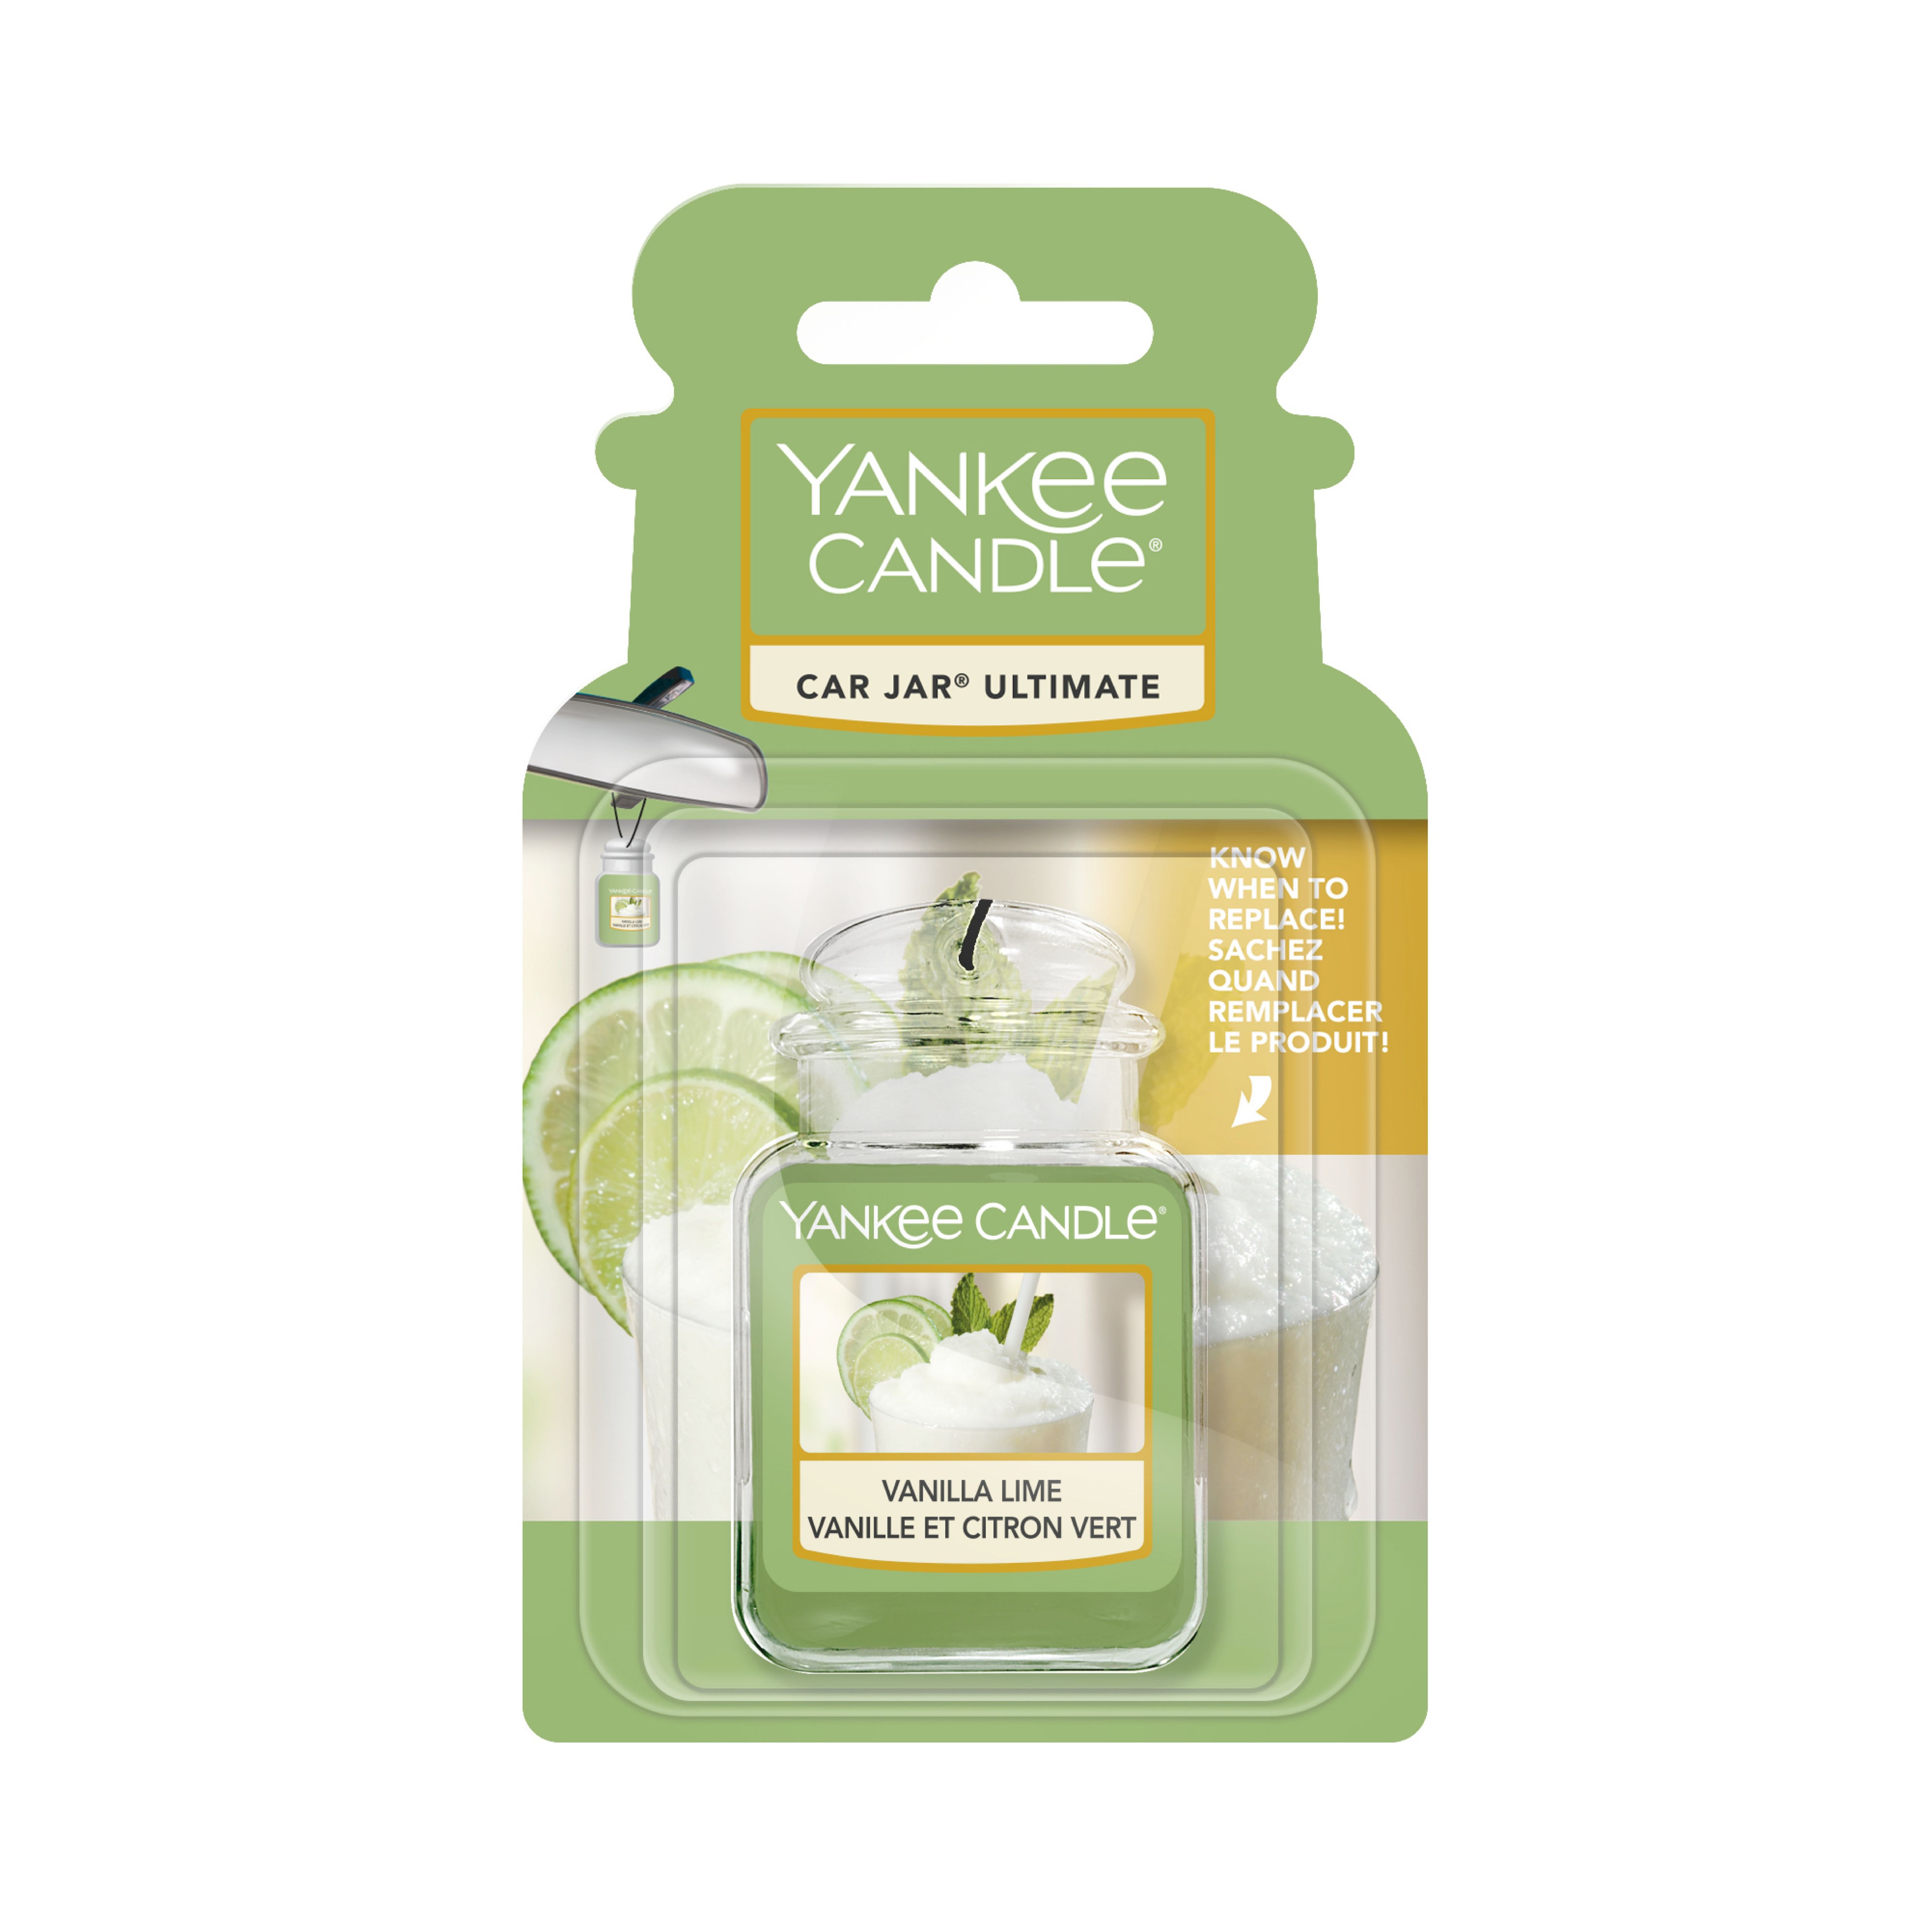 Yankee Candle Car Jar Ultimate Vanilla Lime Air freshener, 24g